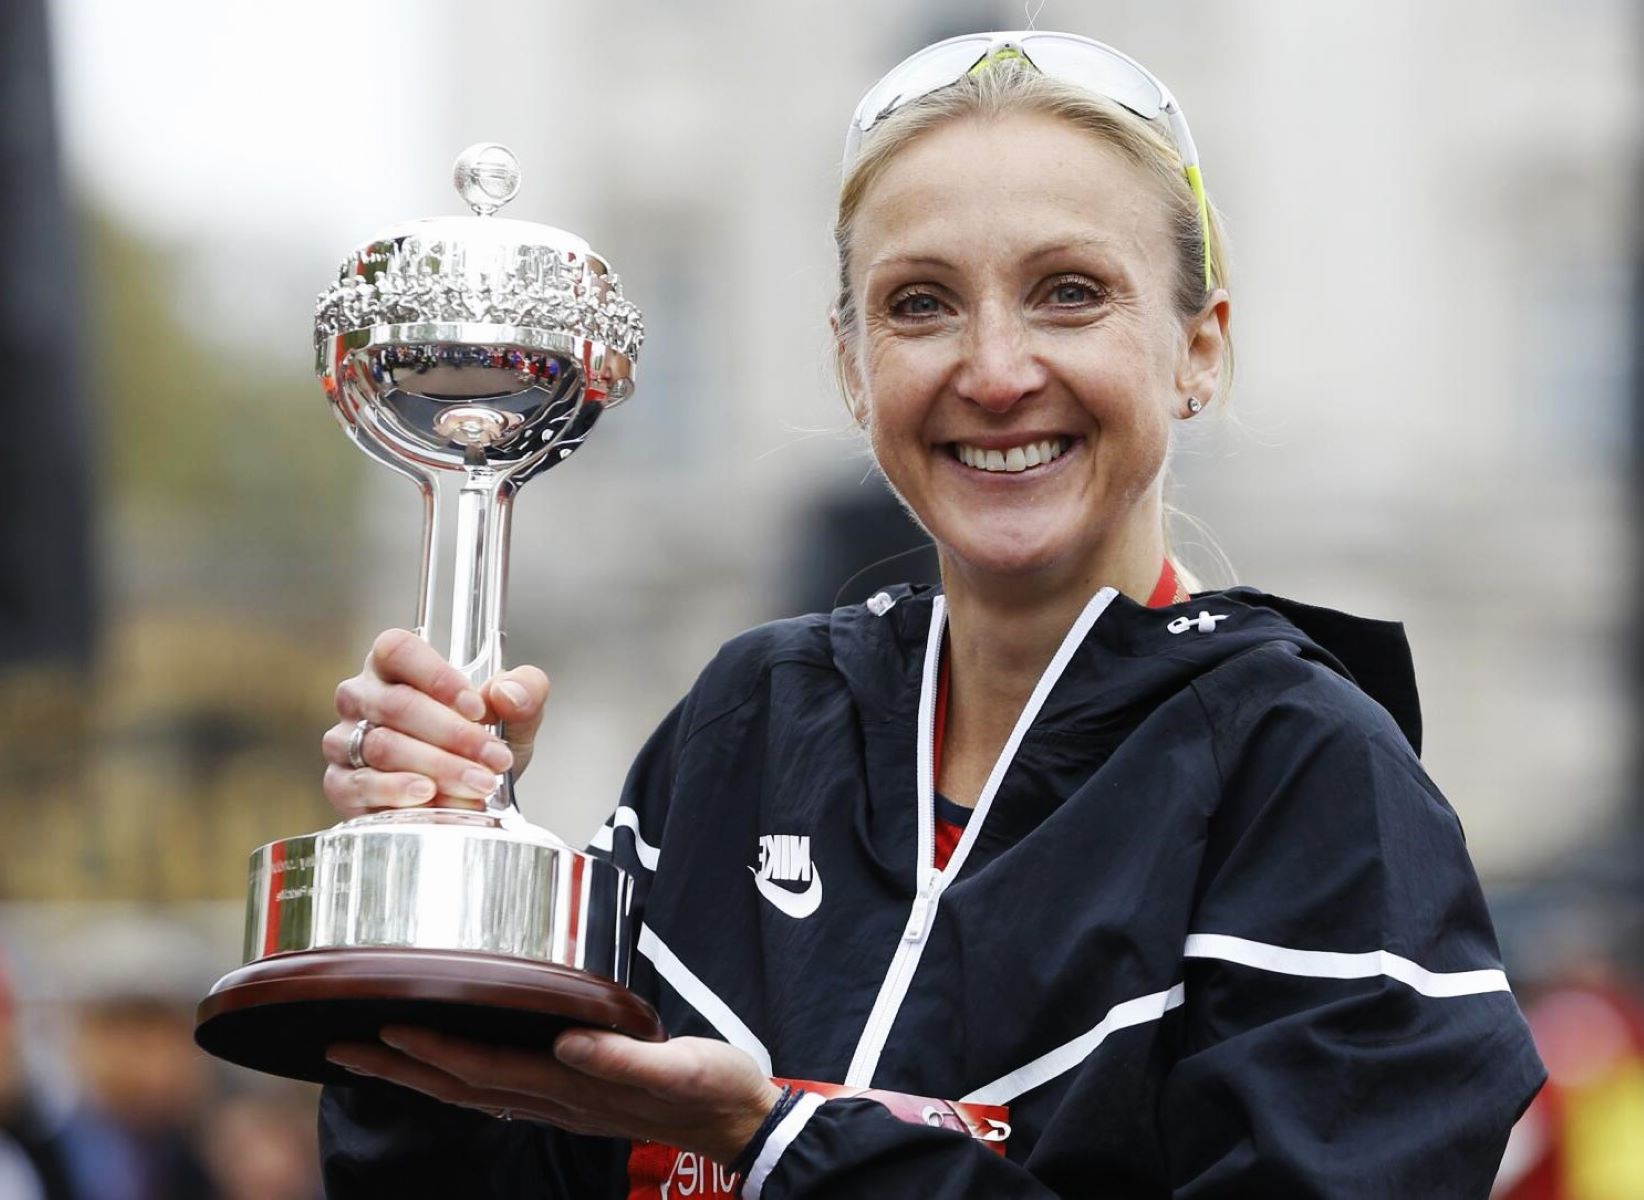 Paula Radcliffe's Expert Advice For Marathon Training